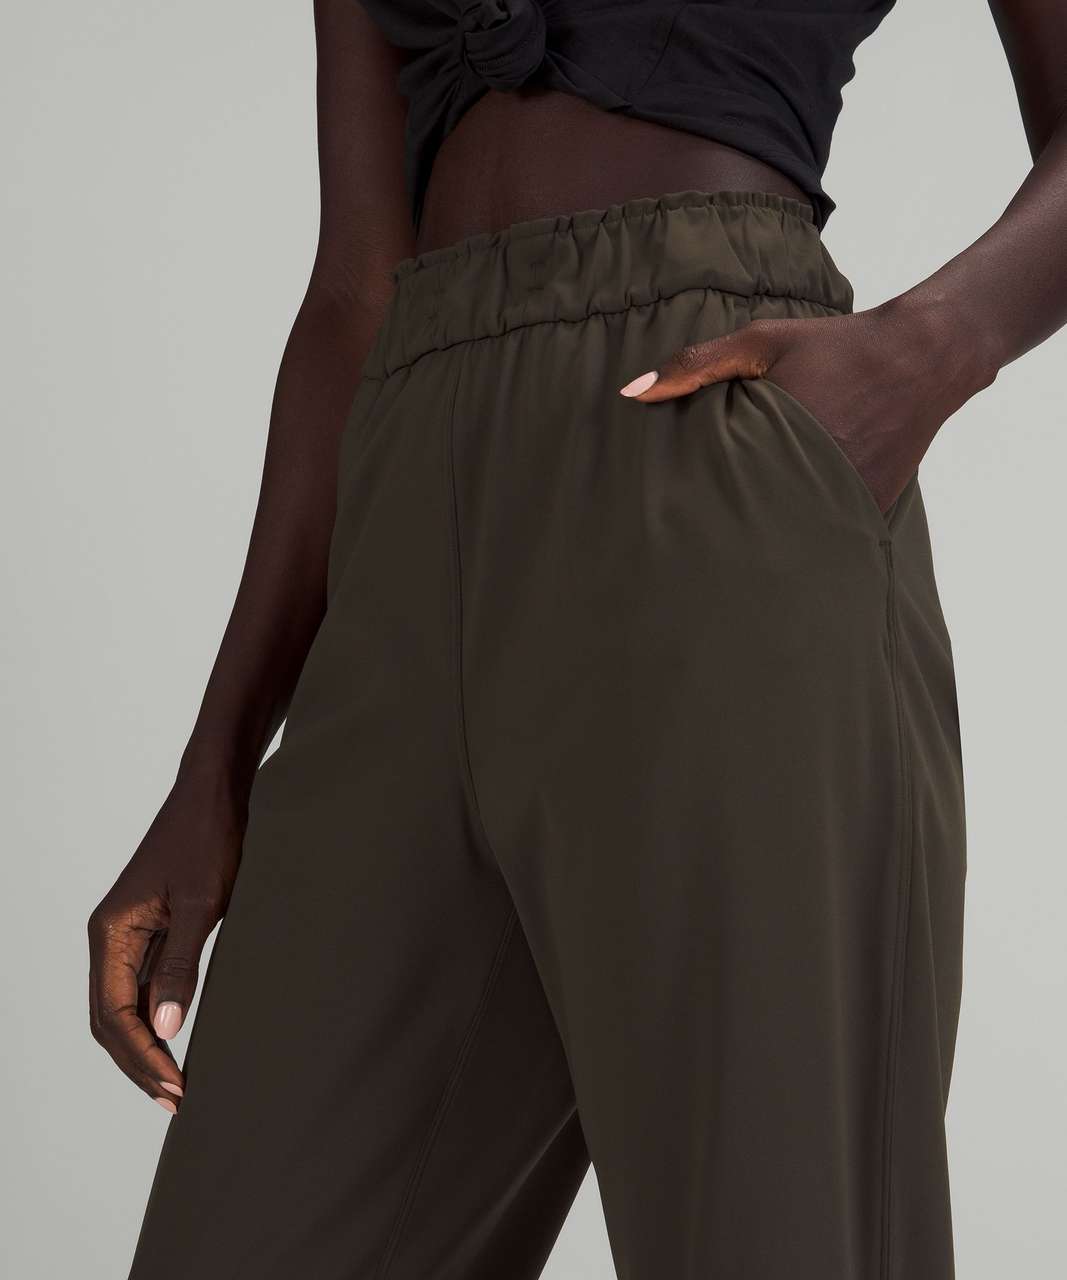 lululemon athletica, Pants & Jumpsuits, Euc Lululemon On The Fly Luxtreme  Pants Size 4 Olive